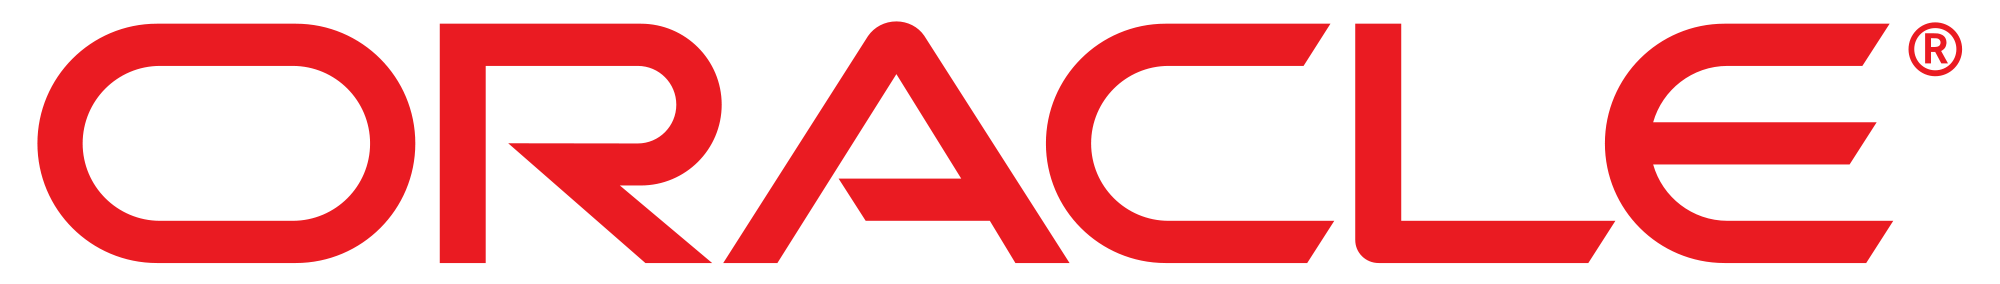 File:Oracle logo.svg